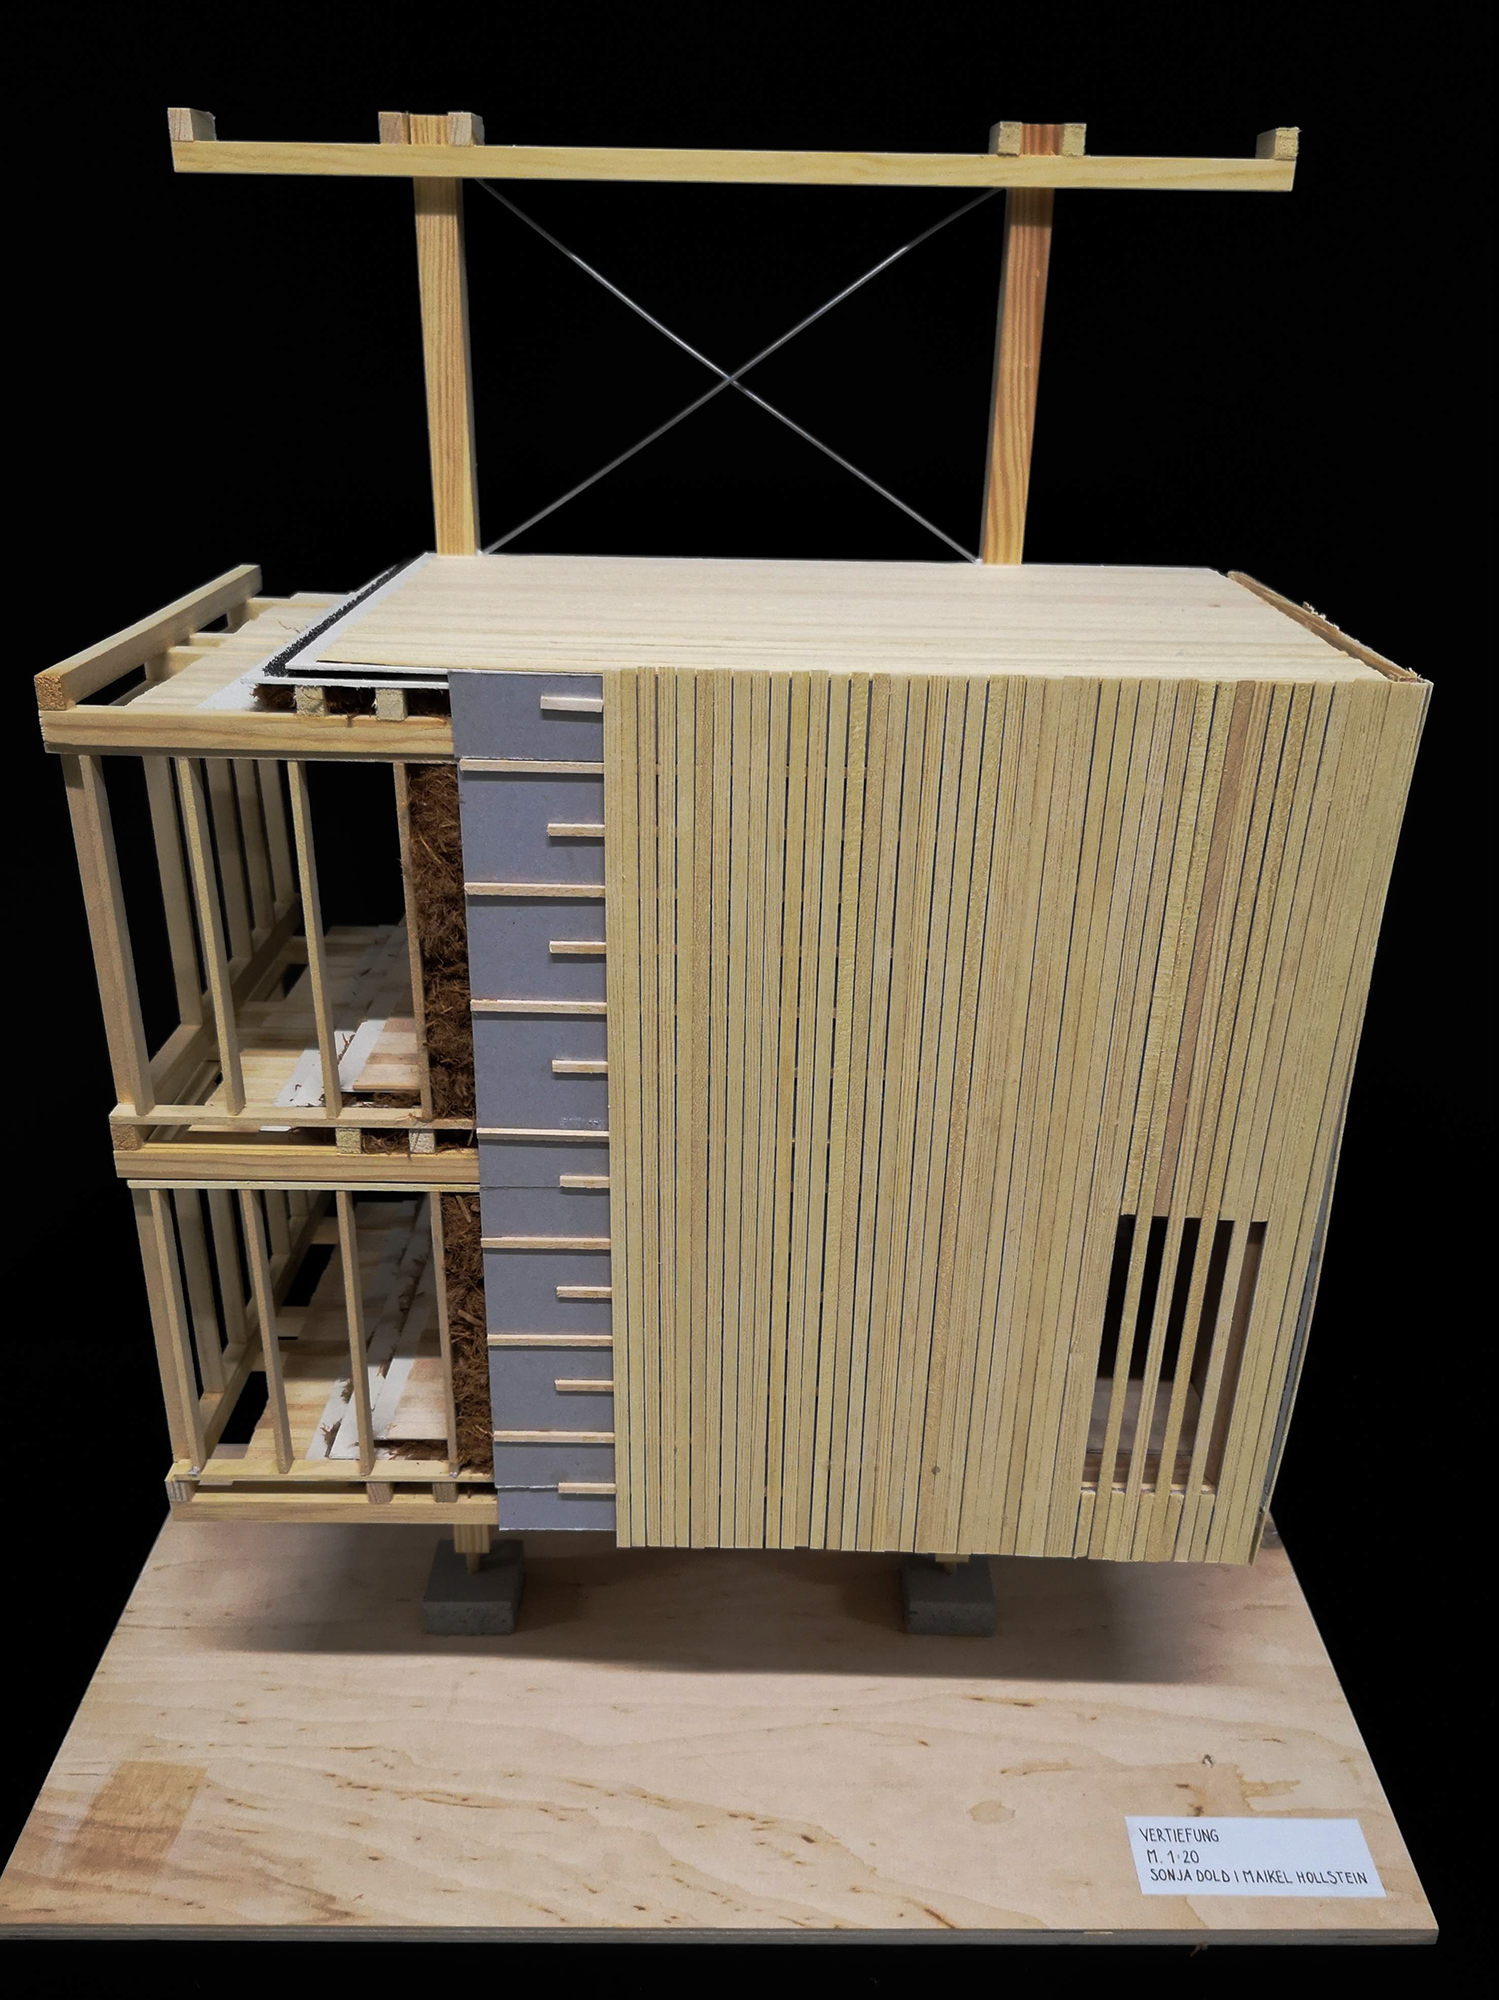 Bild Baukonstruktion Modell 1:50